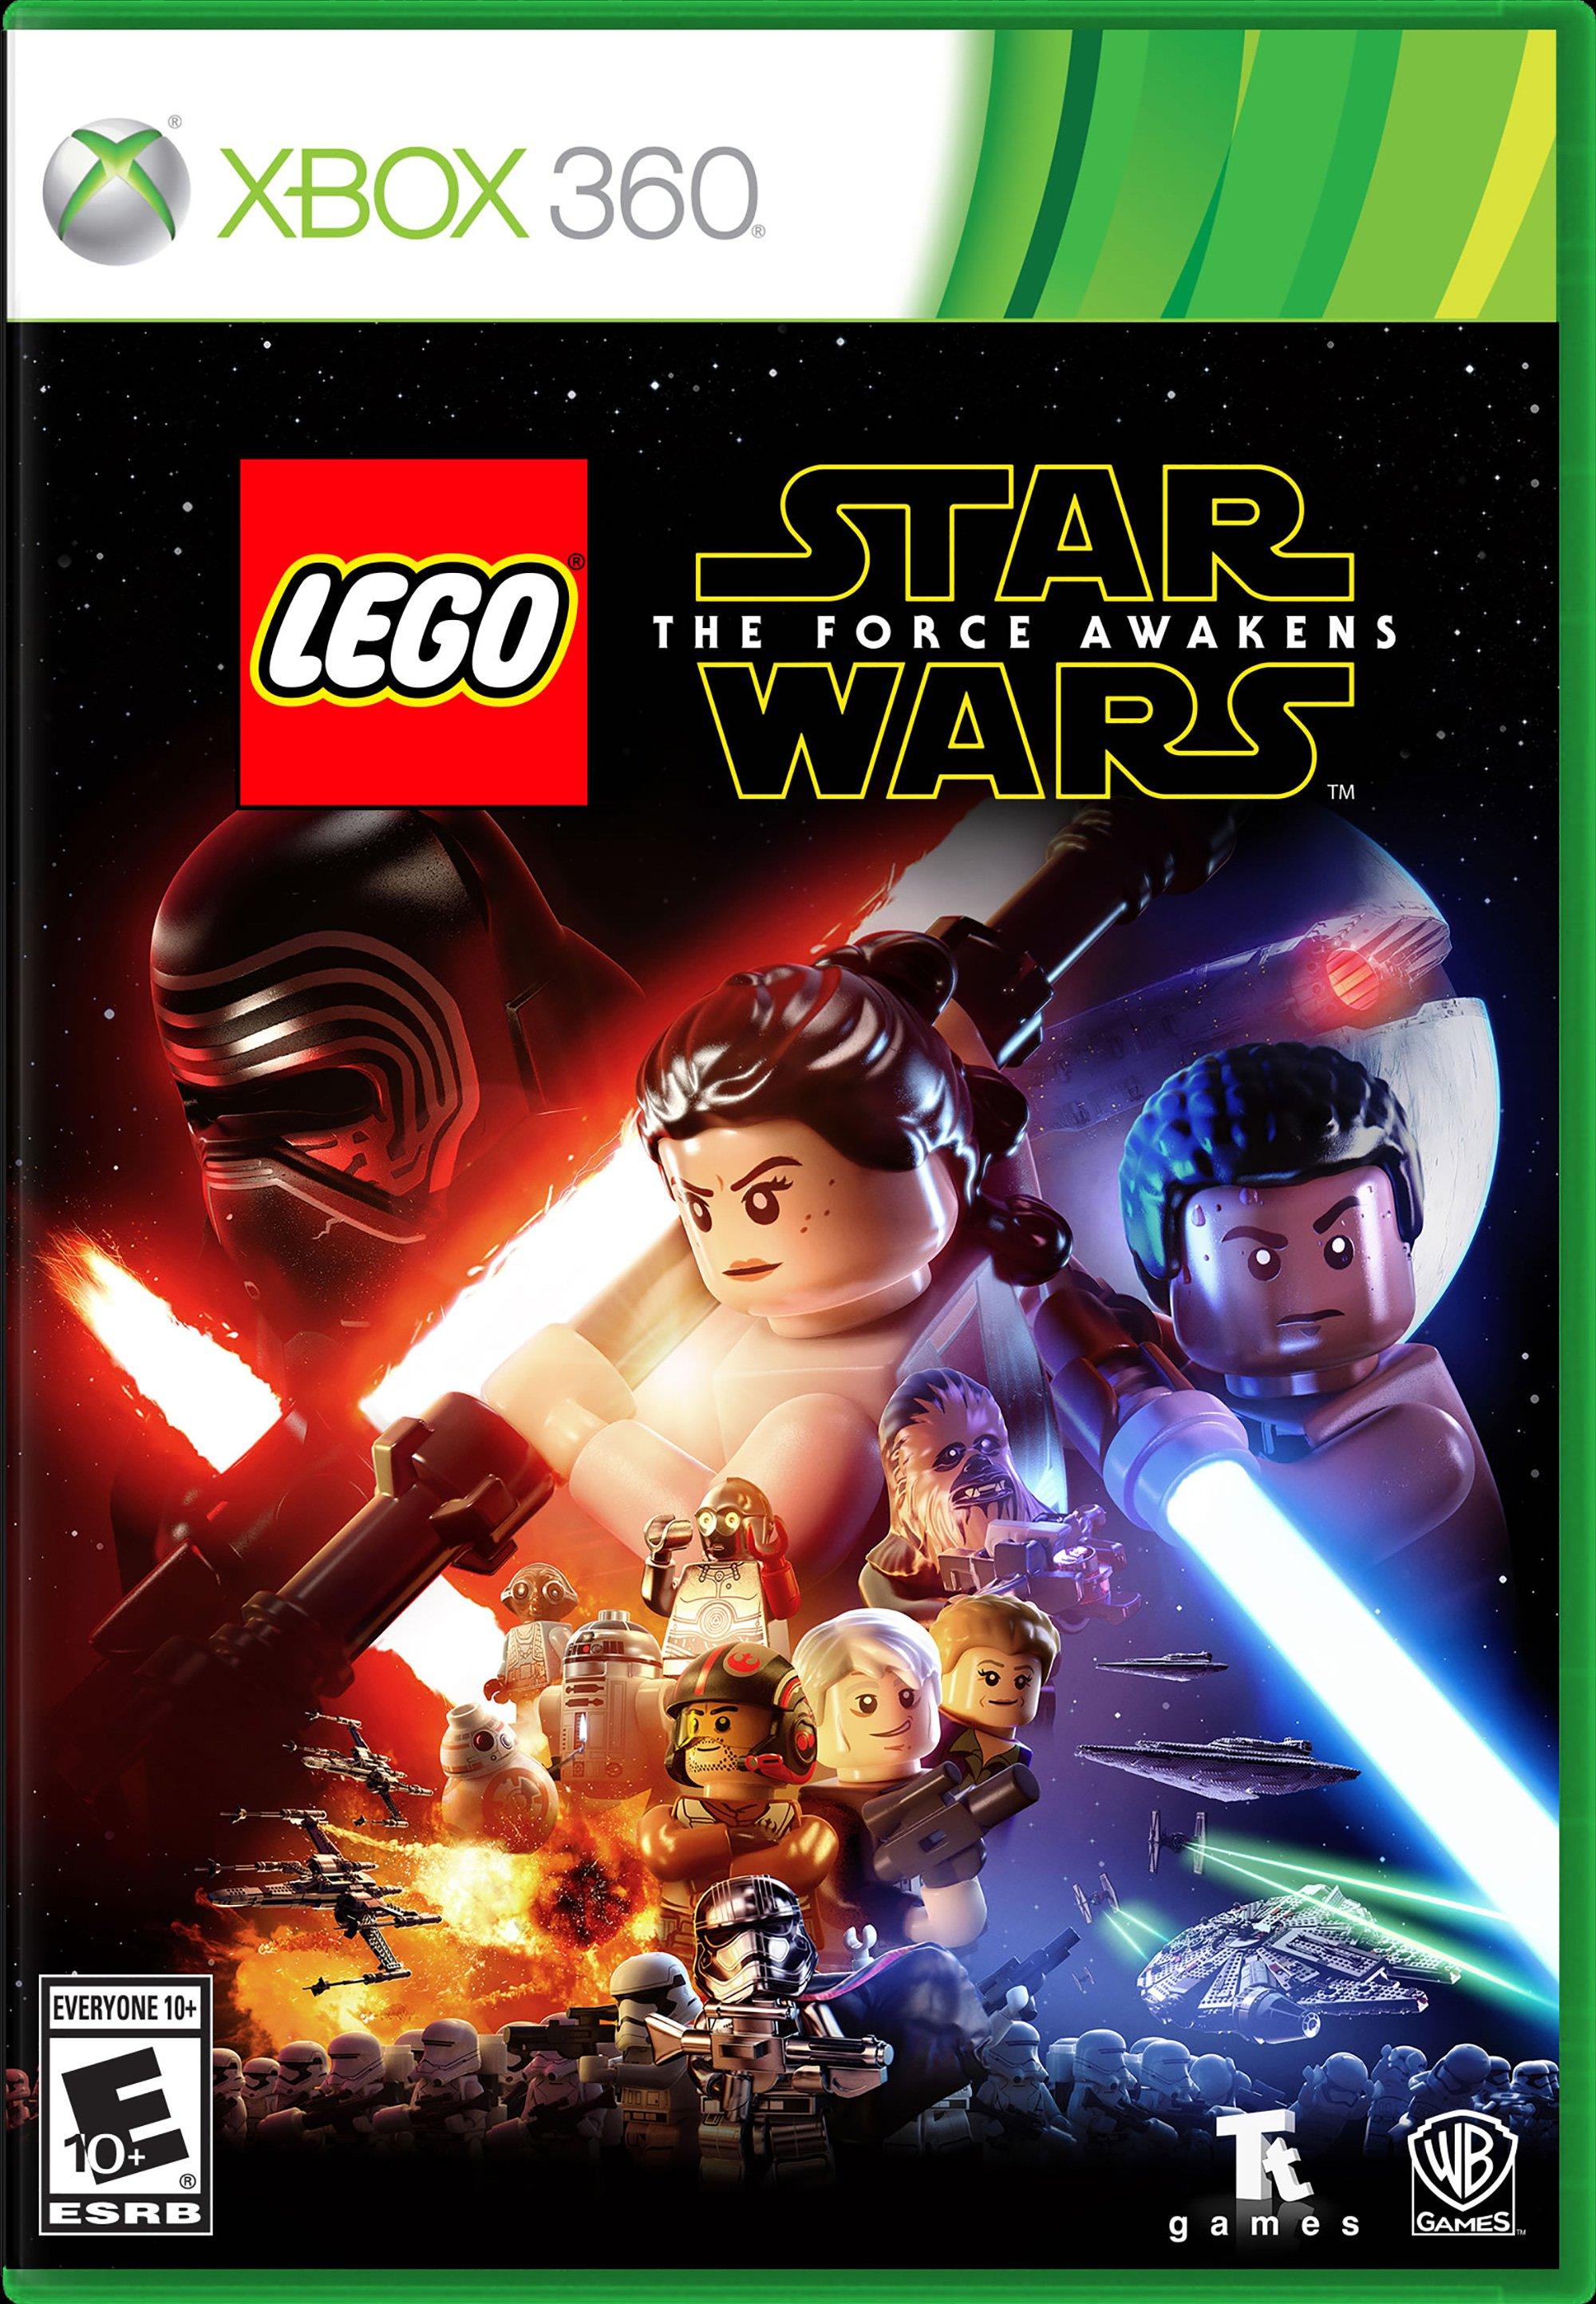 LEGO Star Wars: The Force Awakens - Xbox 360